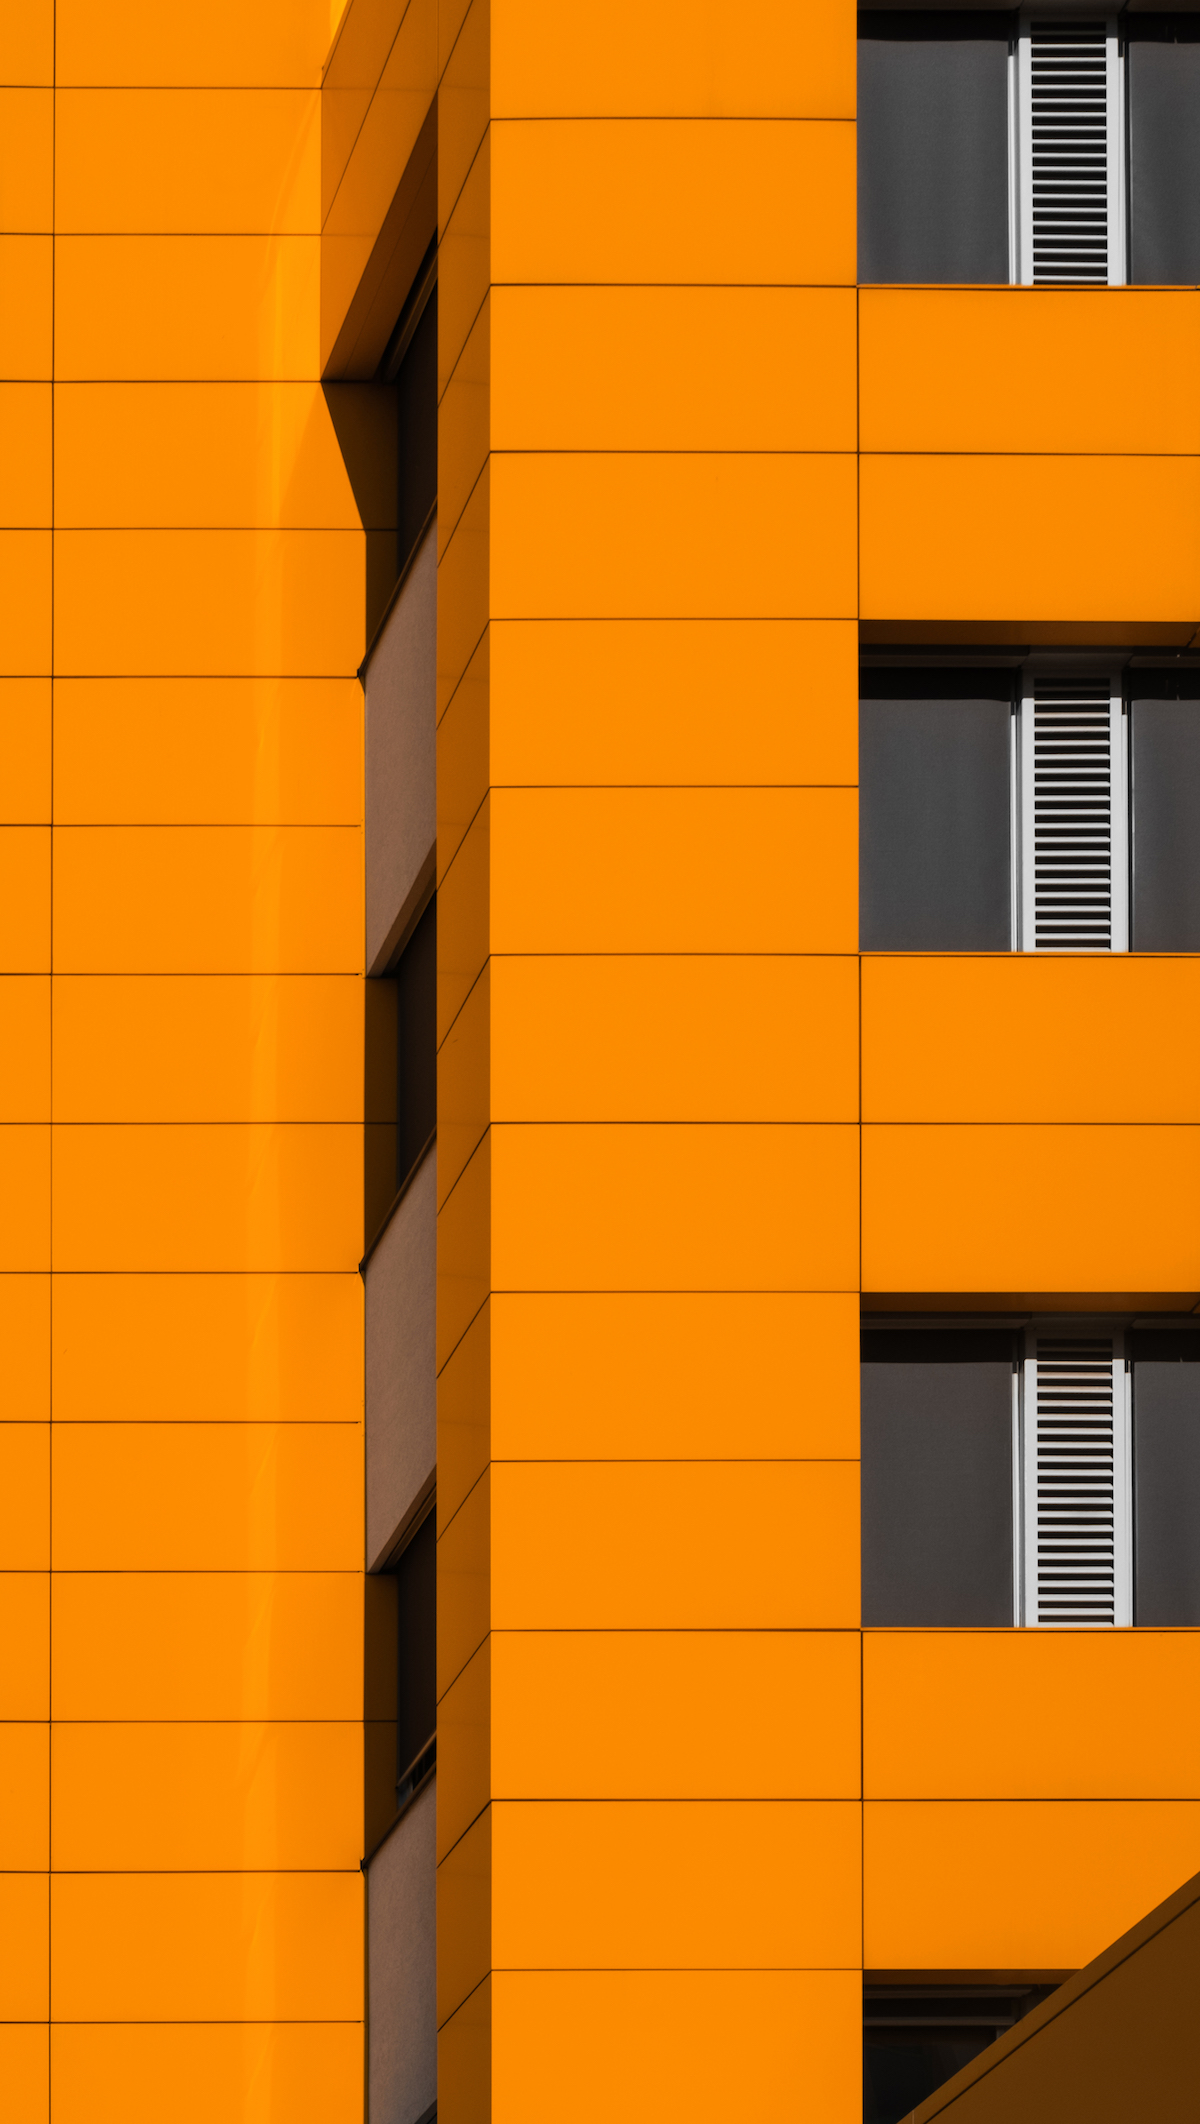 Detail of  facade on orange building.